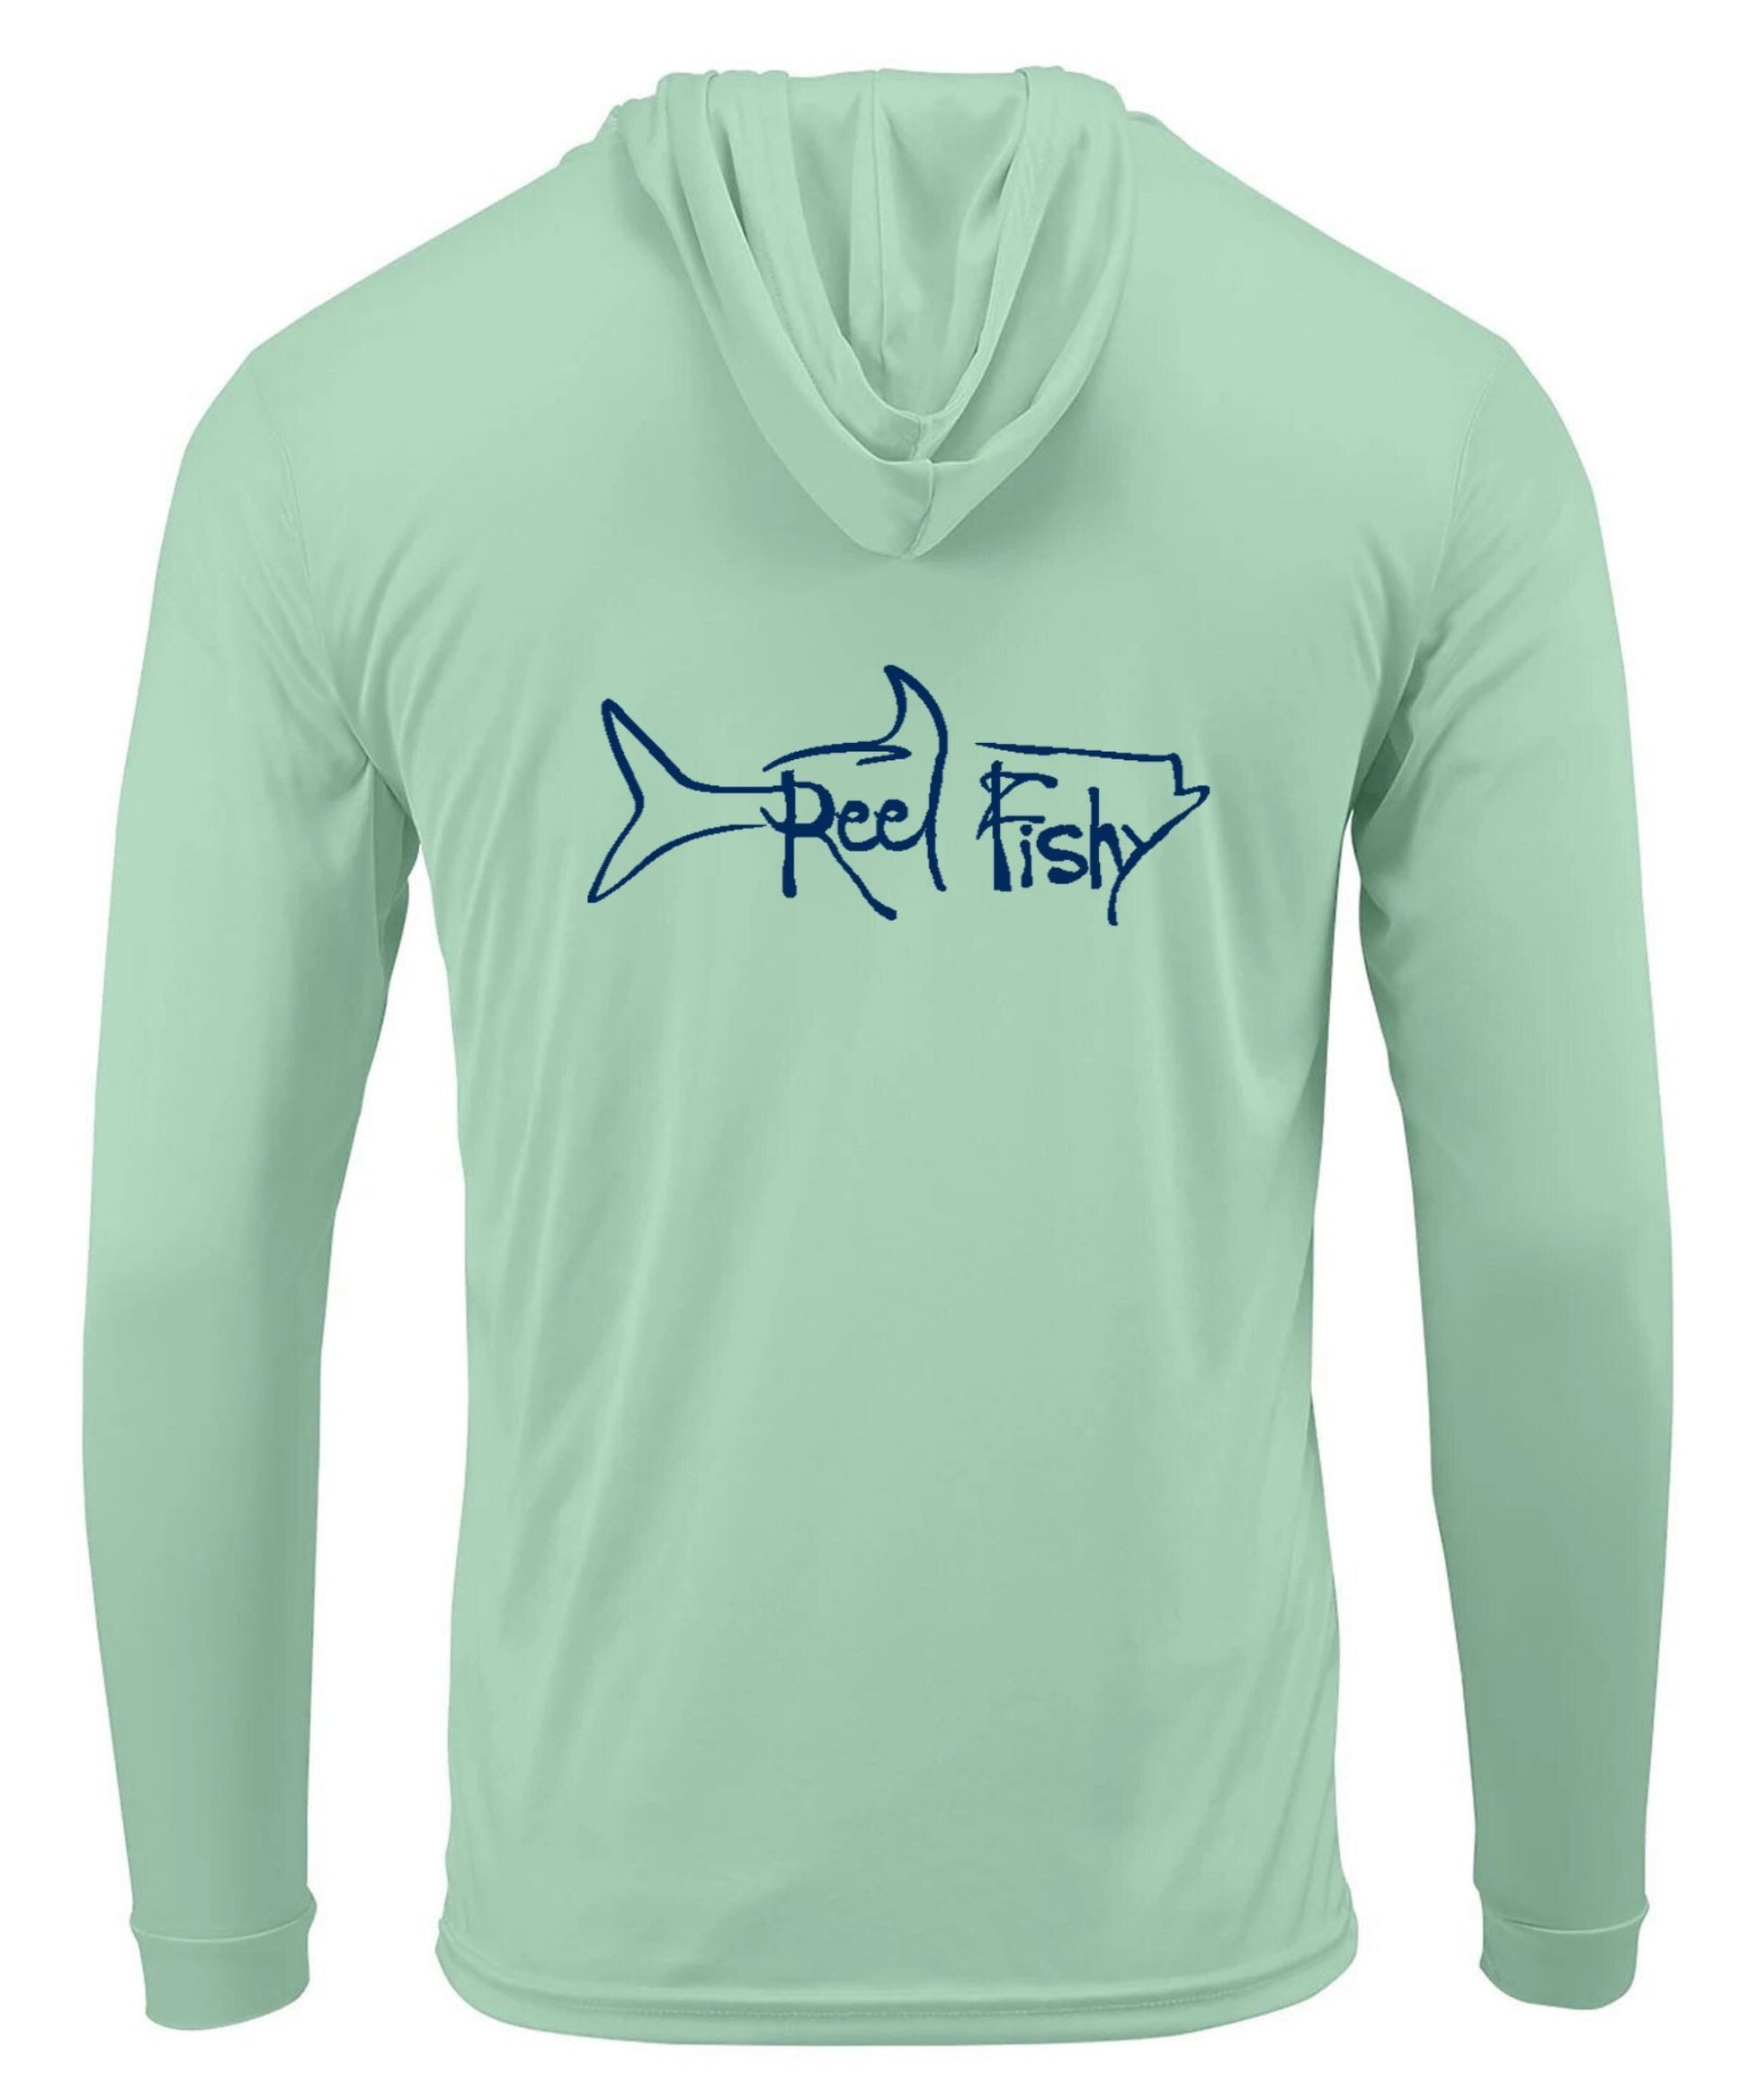 Tarpon Performance Hoodie Fishing Shirts, 50+Upf Sun Protection - Reel Fishy Apparel L / Lt. Gray Hoodie L/S - unisex